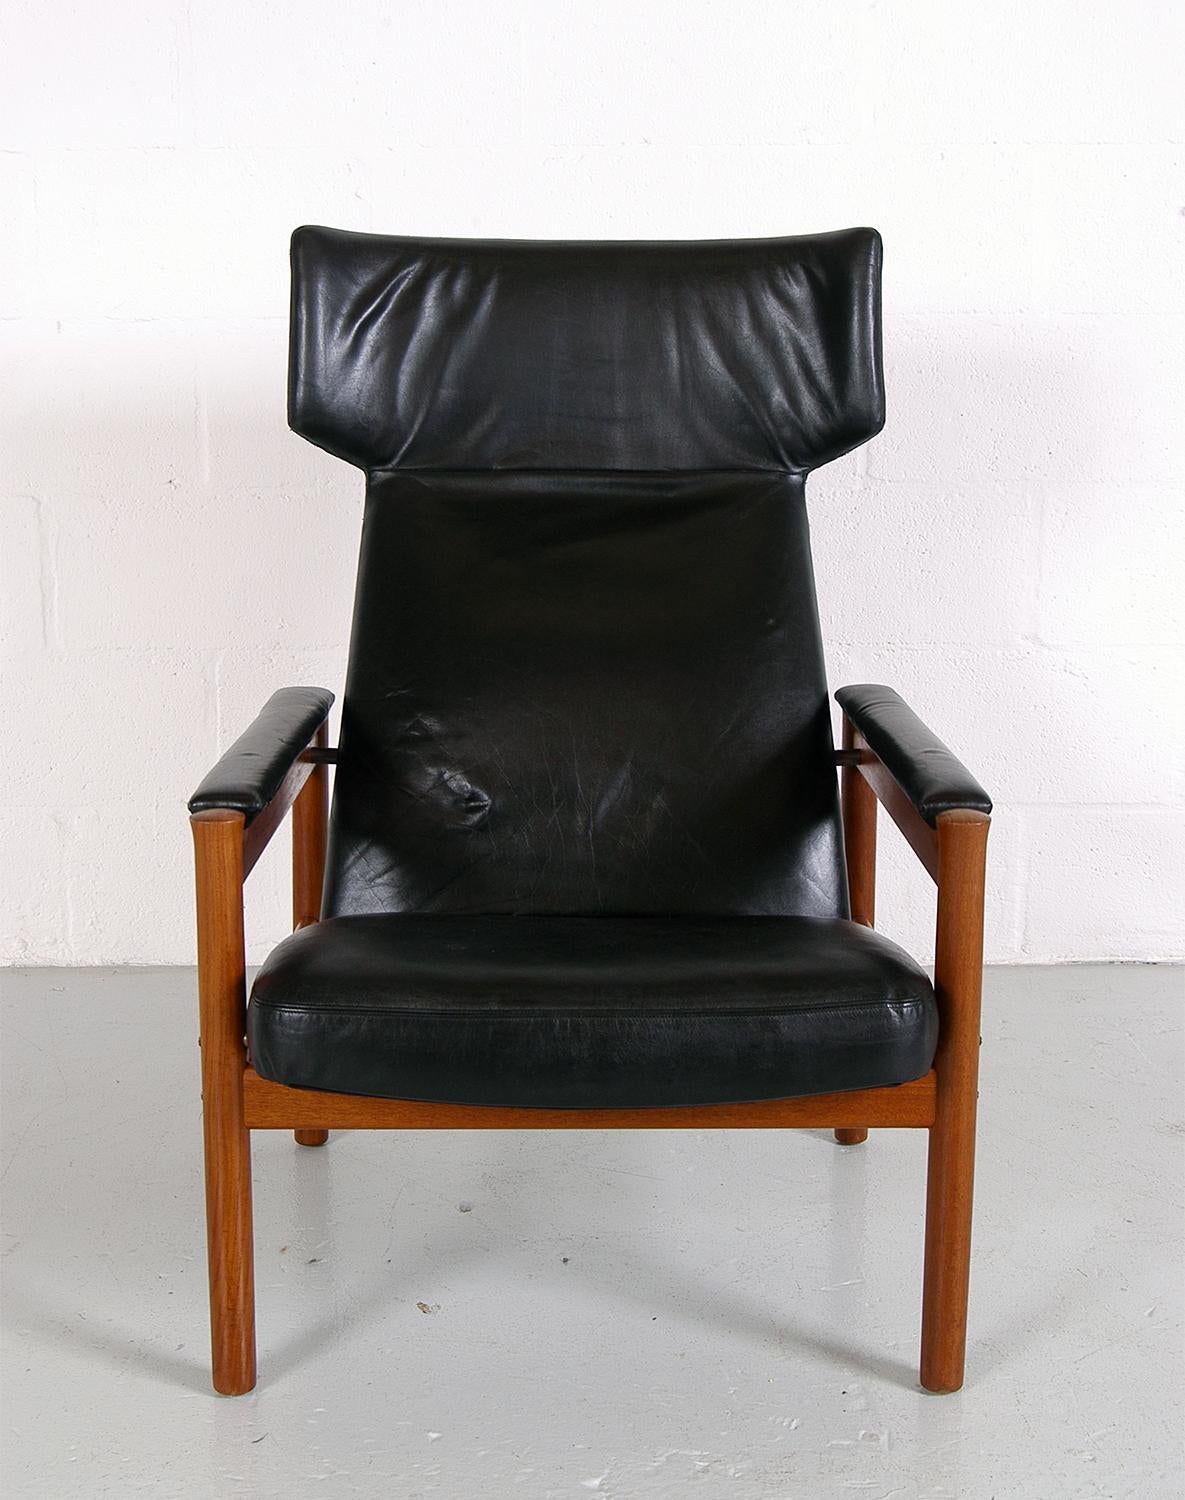 soren leather chair